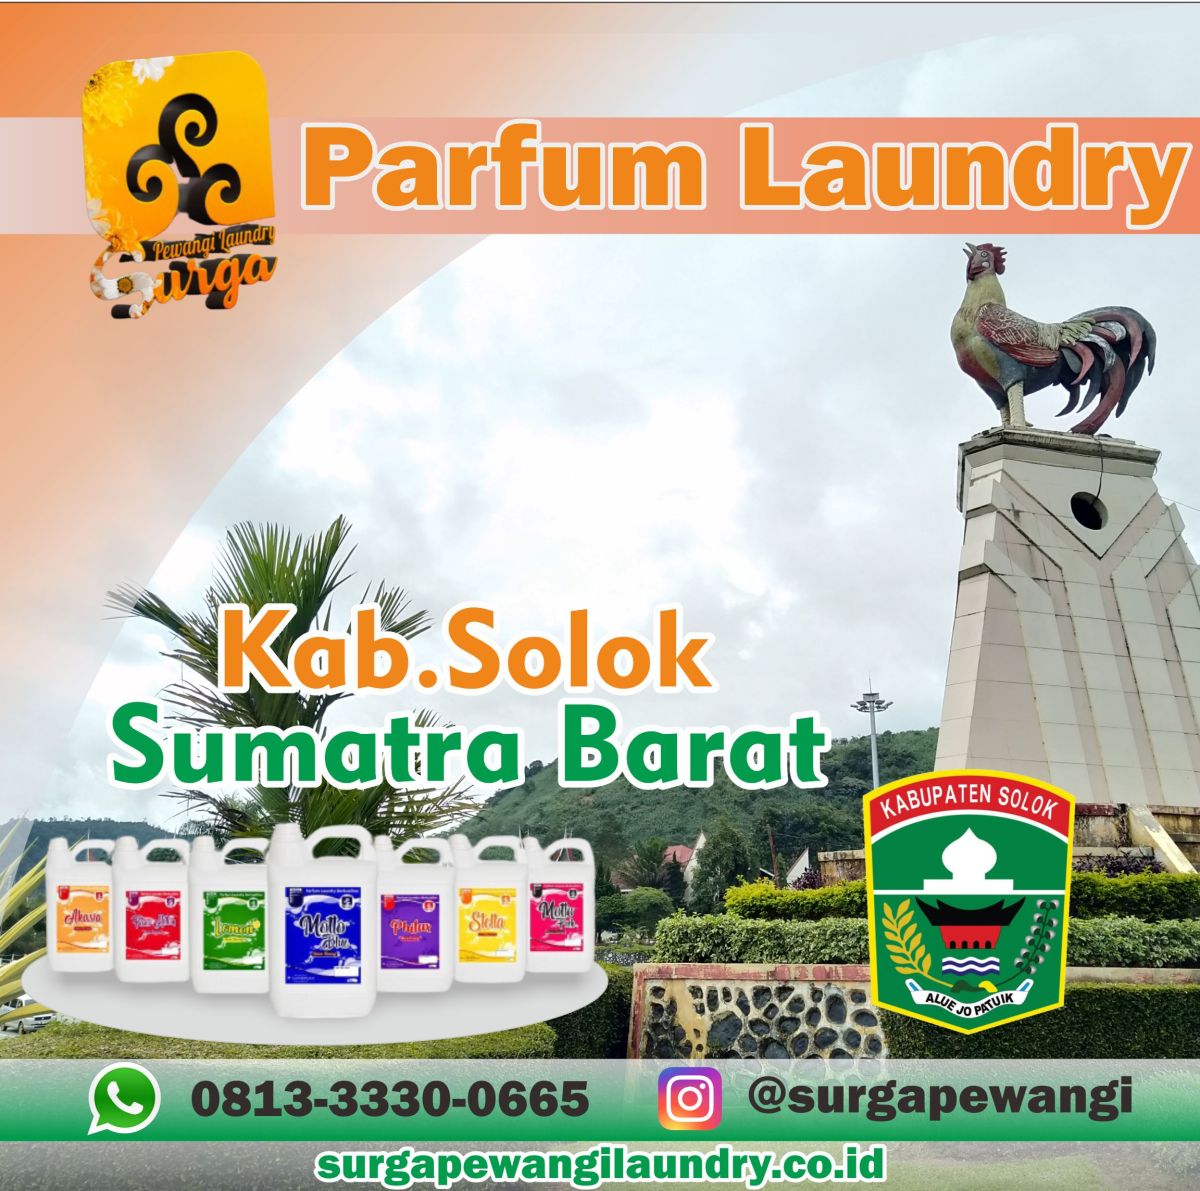 Parfum Laundry Kabupaten Solok, Sumatra Selatan